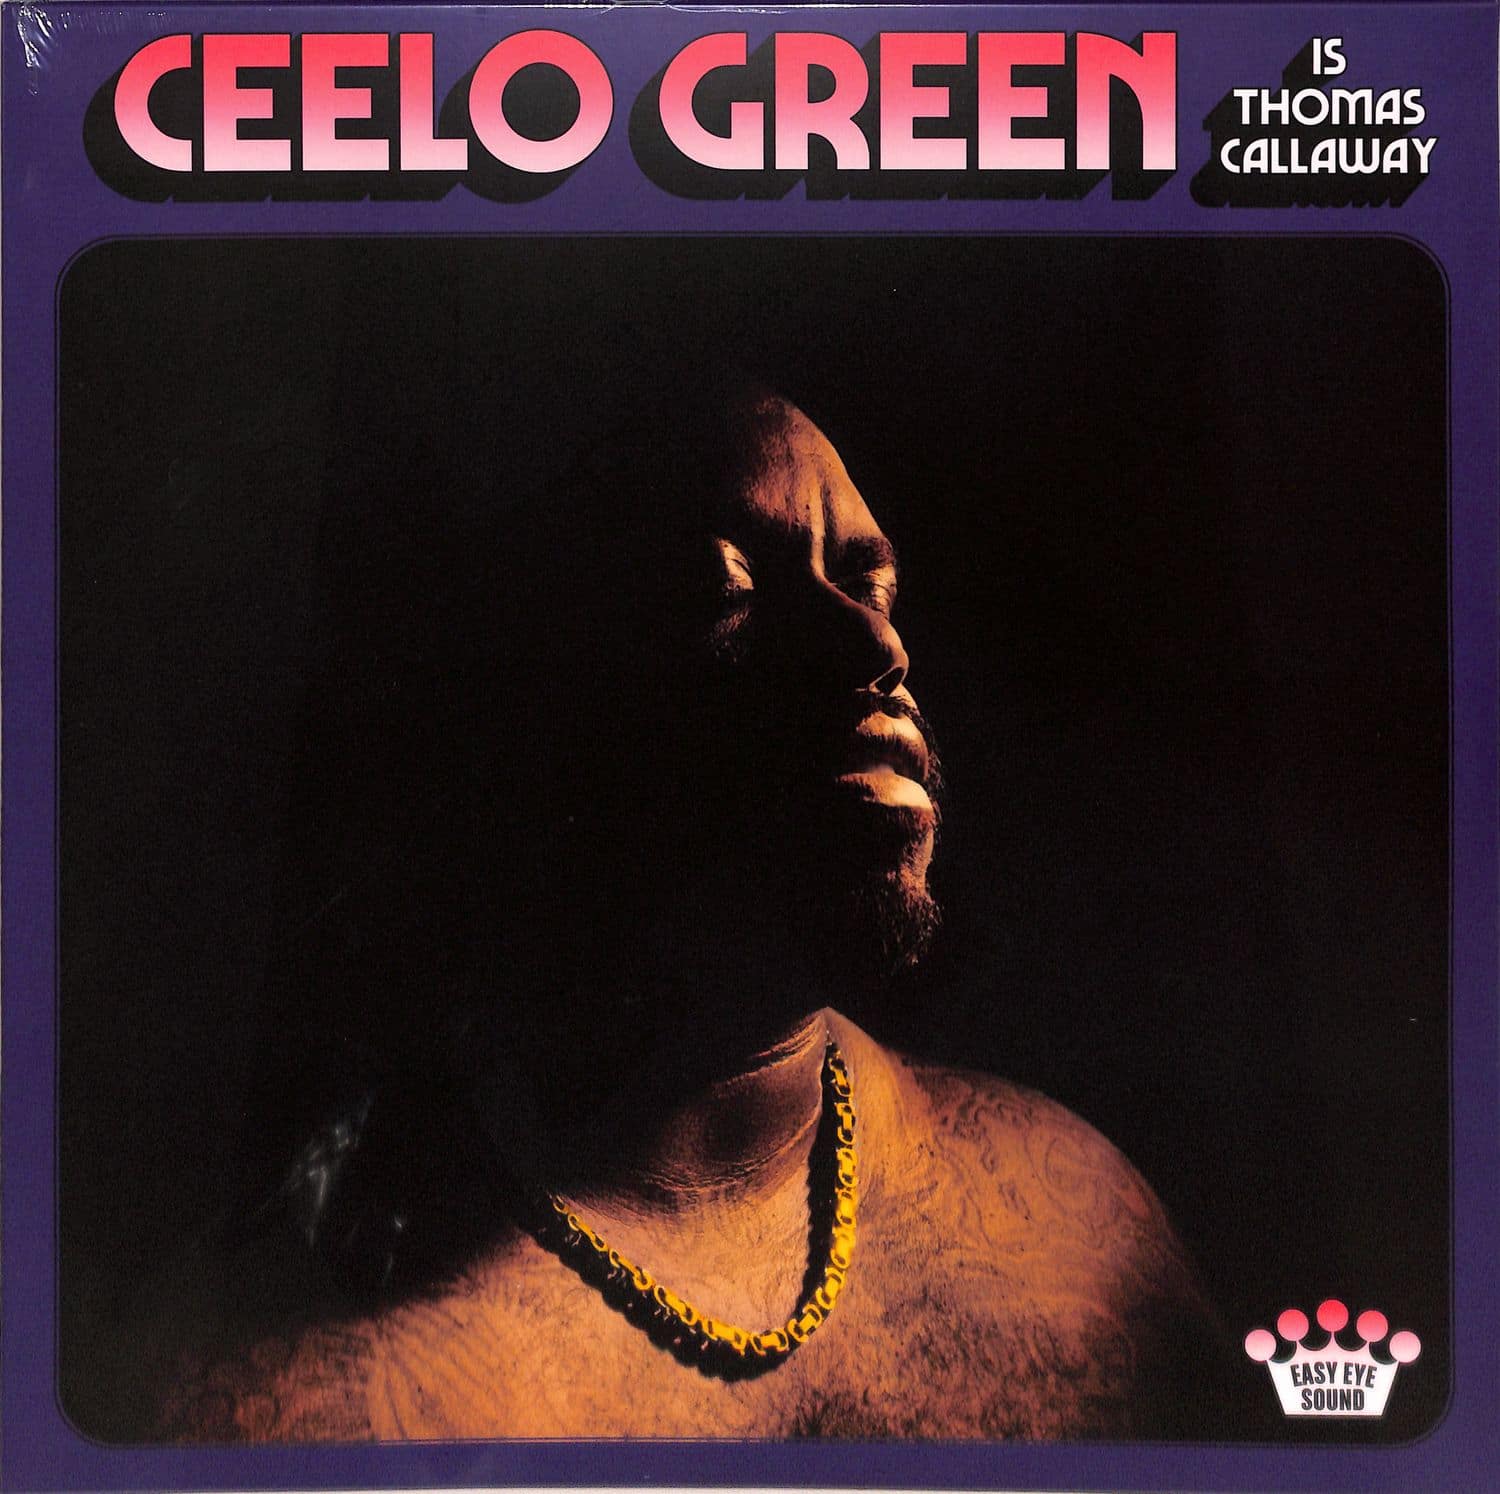 CeeLo Green - CEELO GREEN IS THOMAS CALLAWAY 